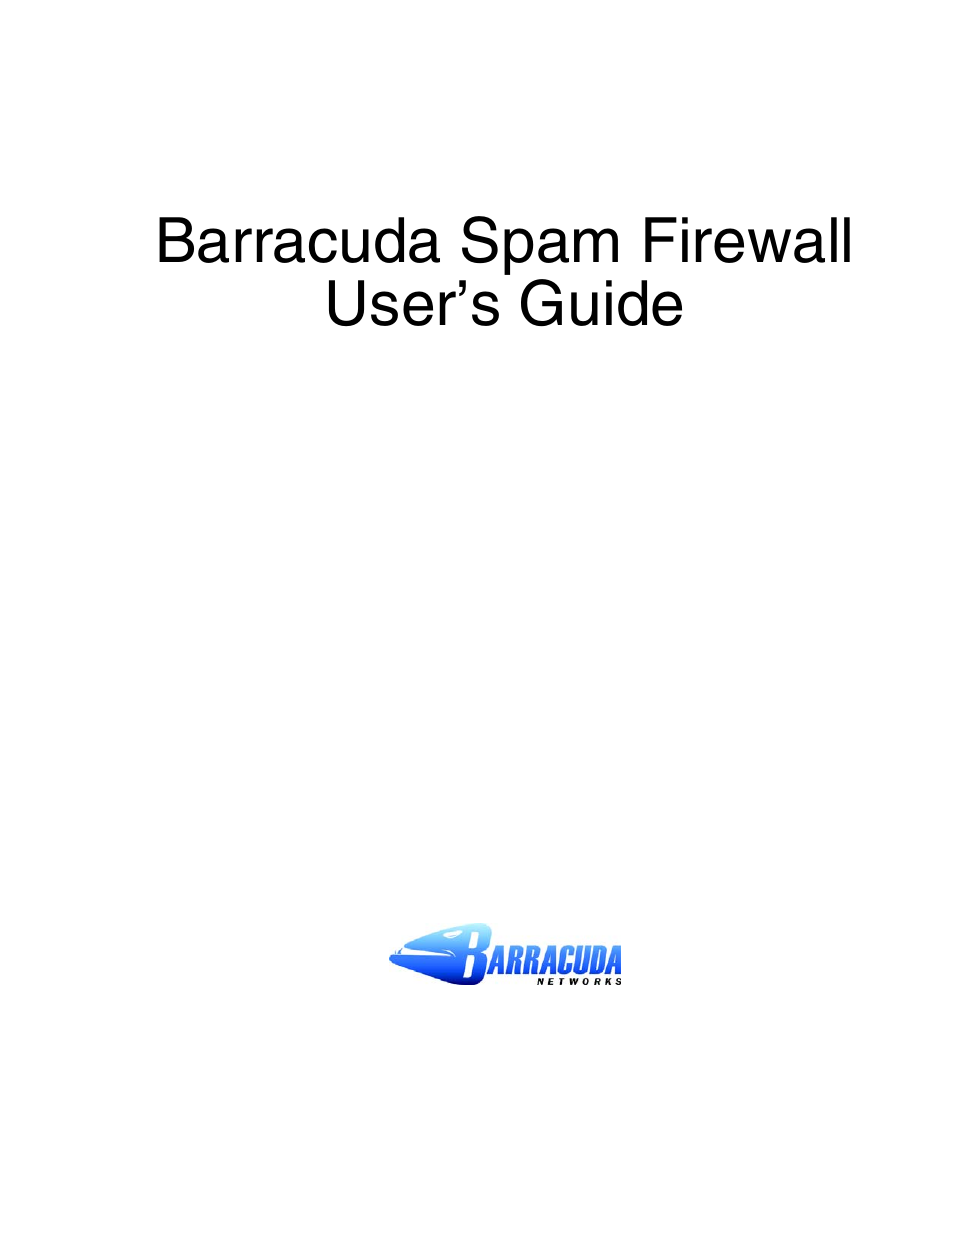 Spam Firewall